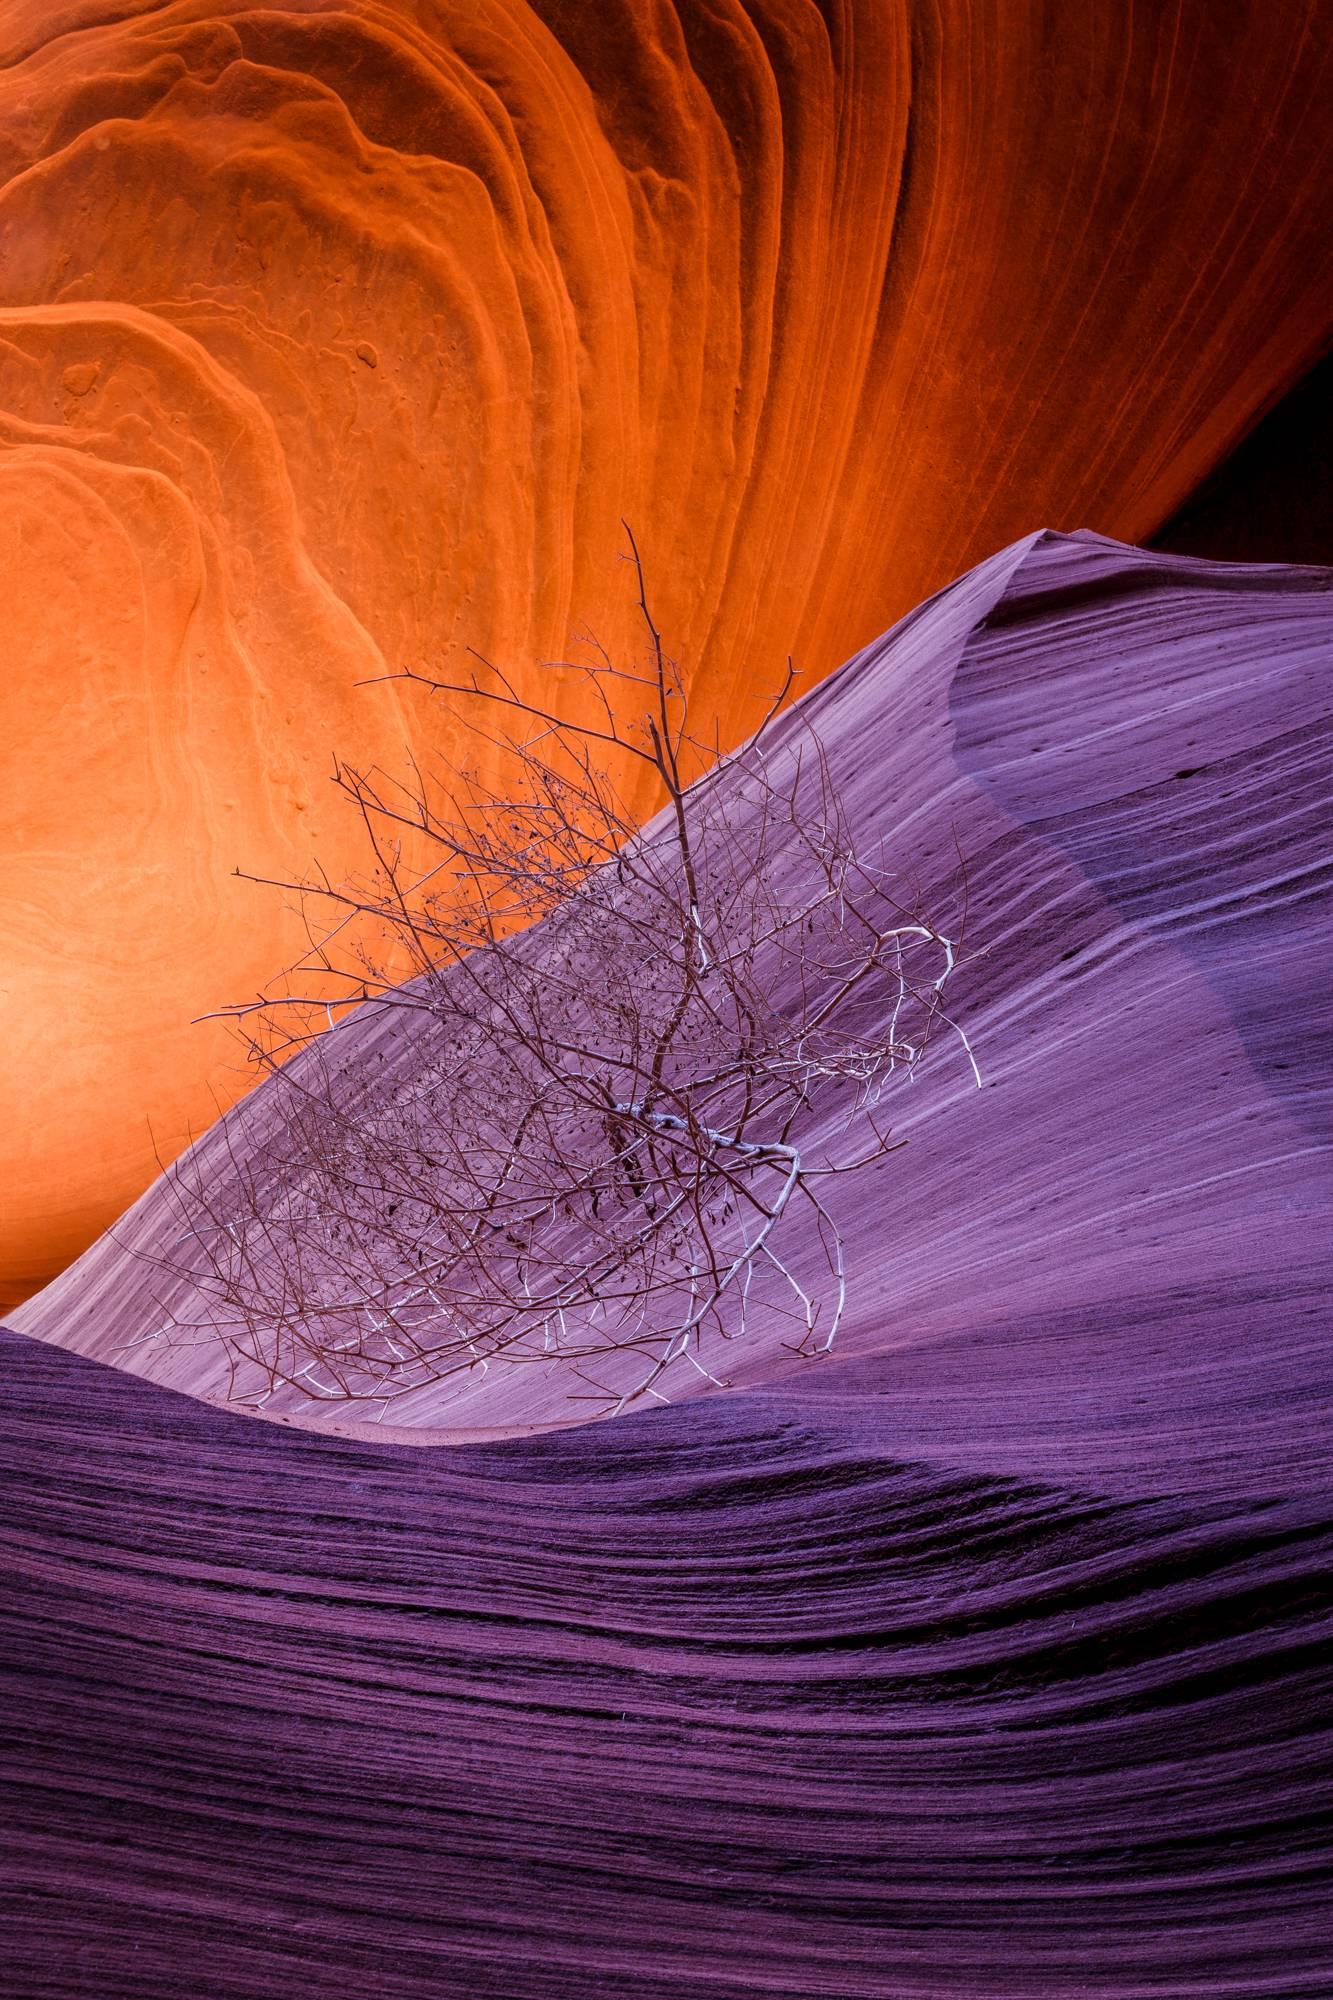 Jessica Fridrich Landscape Photograph - Arizona landscape photography with orange and purple , "Orphan", UV laminate